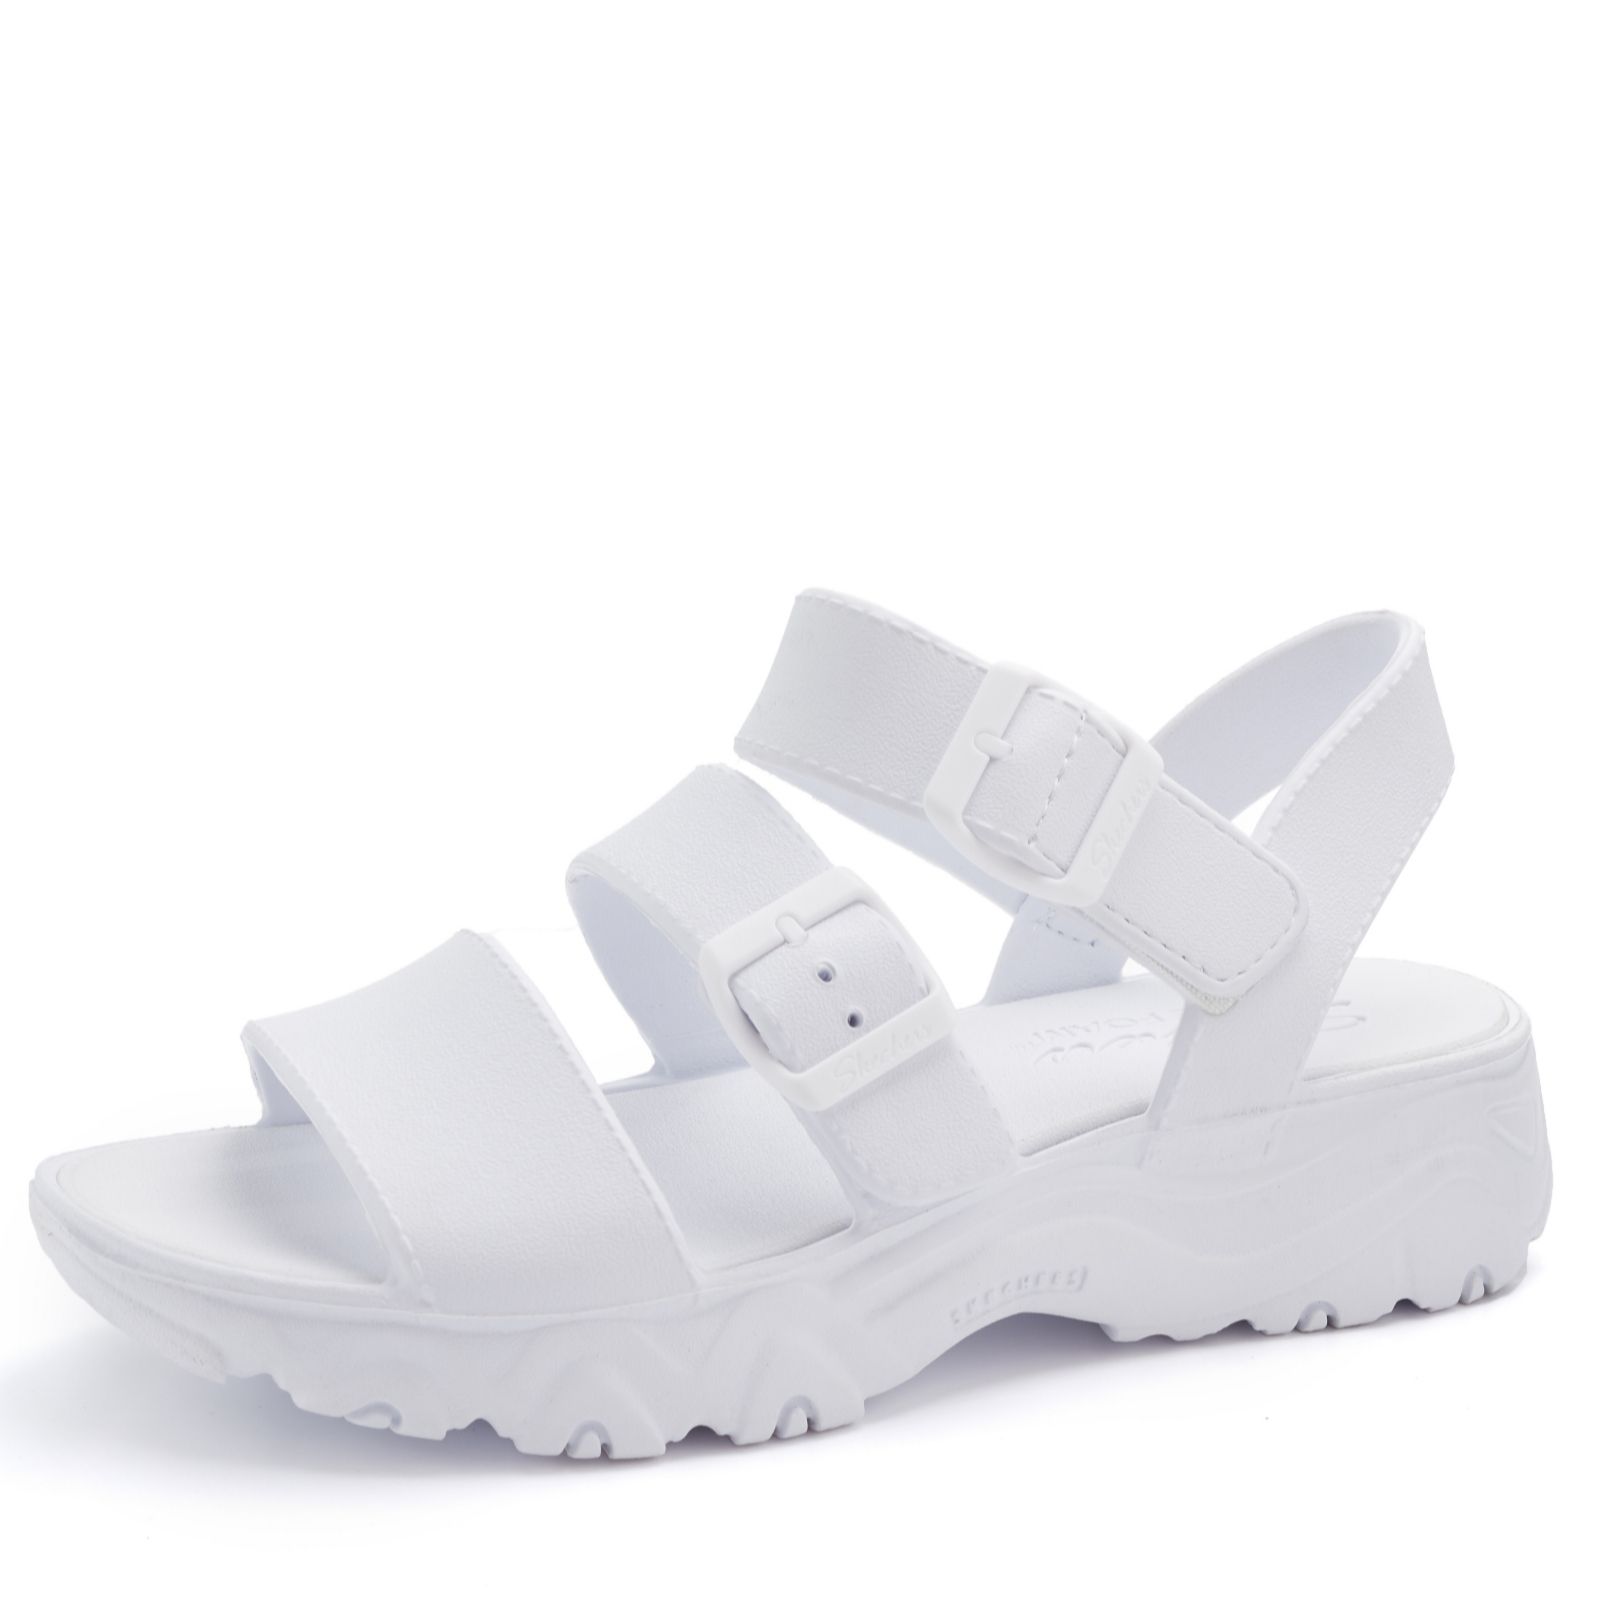 skechers luxe foam sandals uk